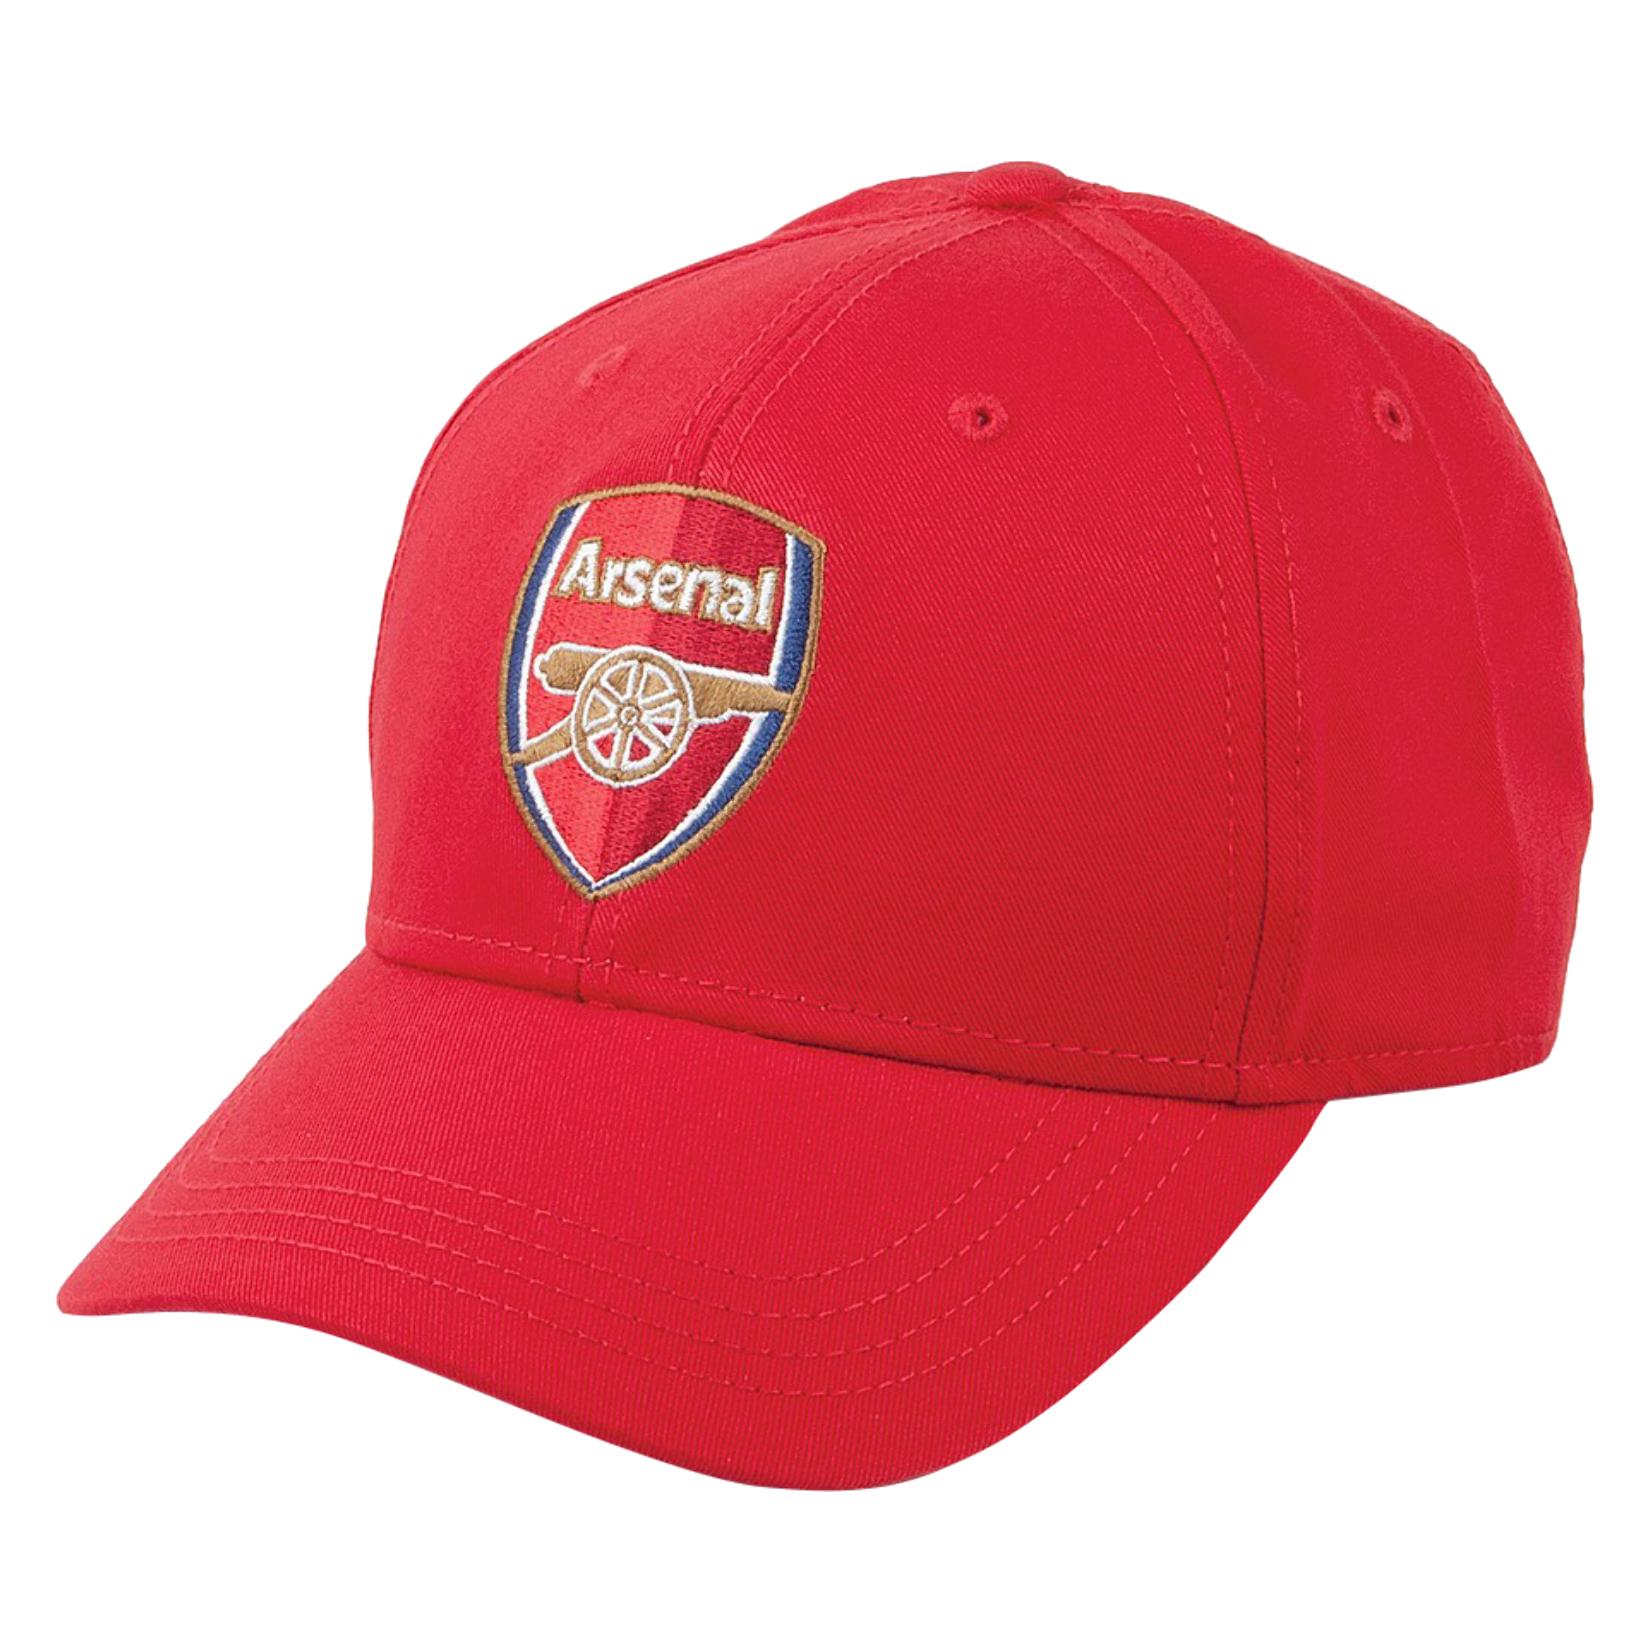 Arsenal Team Merchandise Core Cap - Kitlocker.com